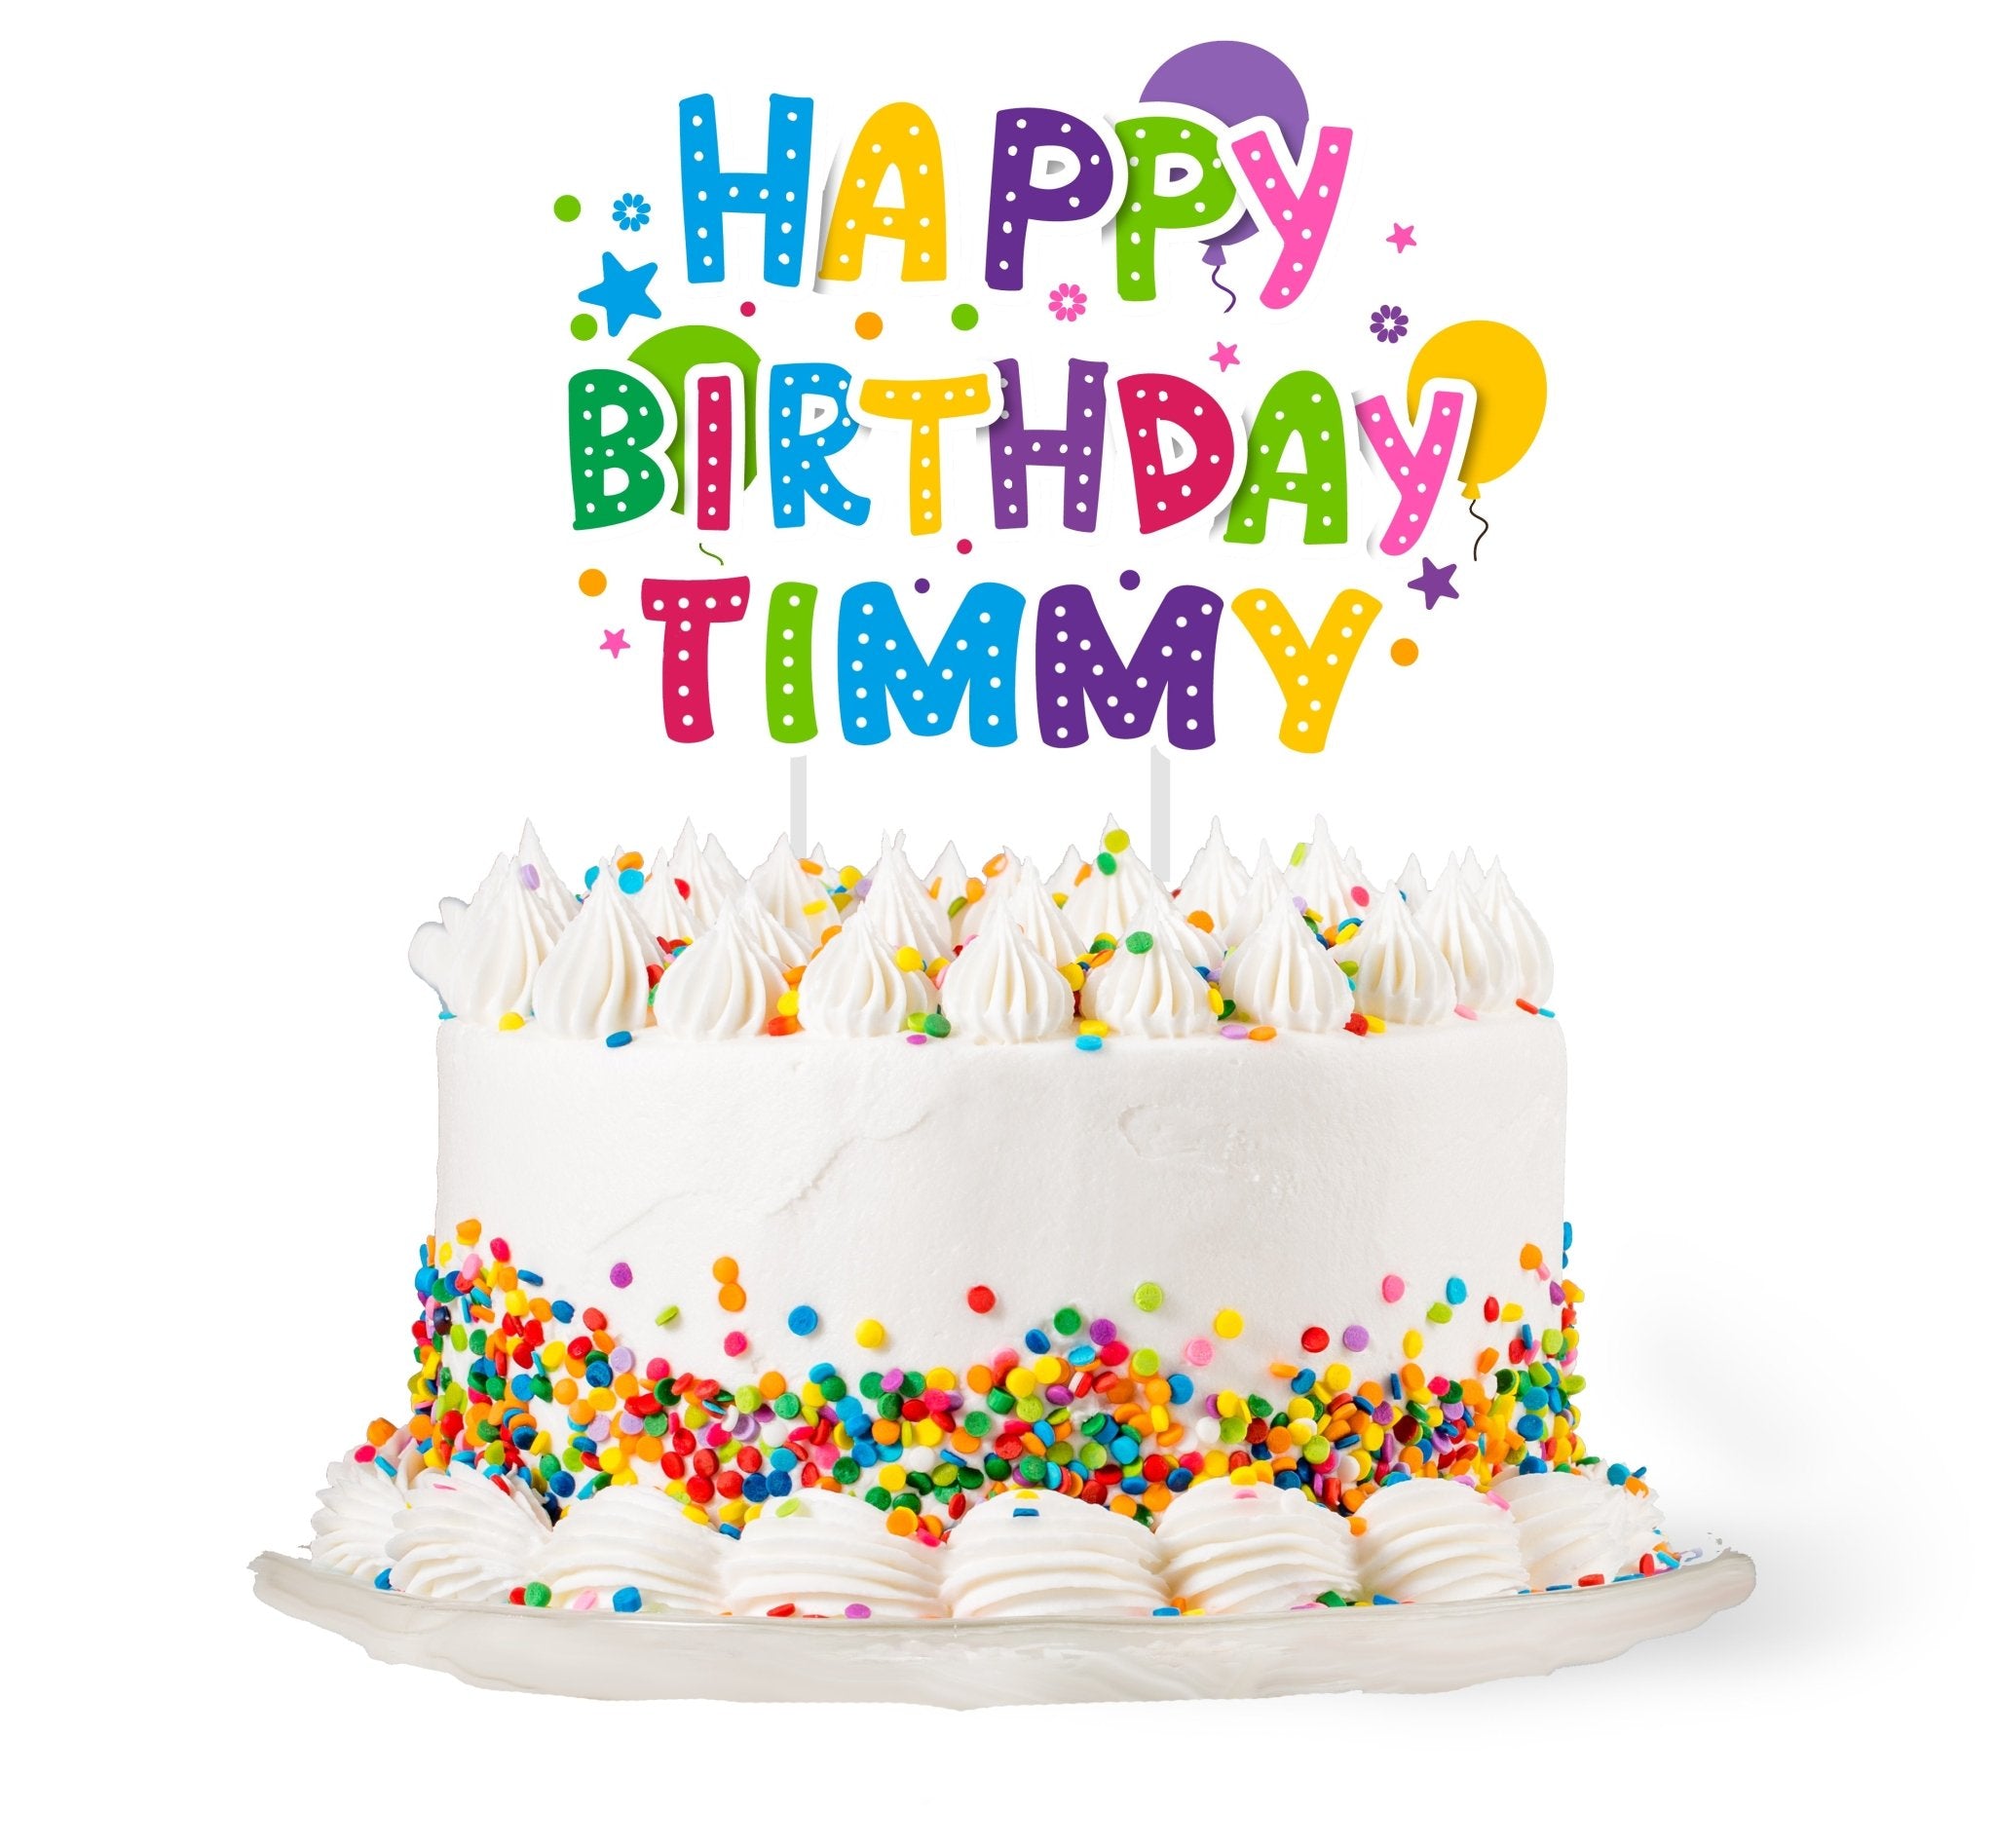 Happy Birthday Jimmy (Ohjimmy) | South Bay Riders